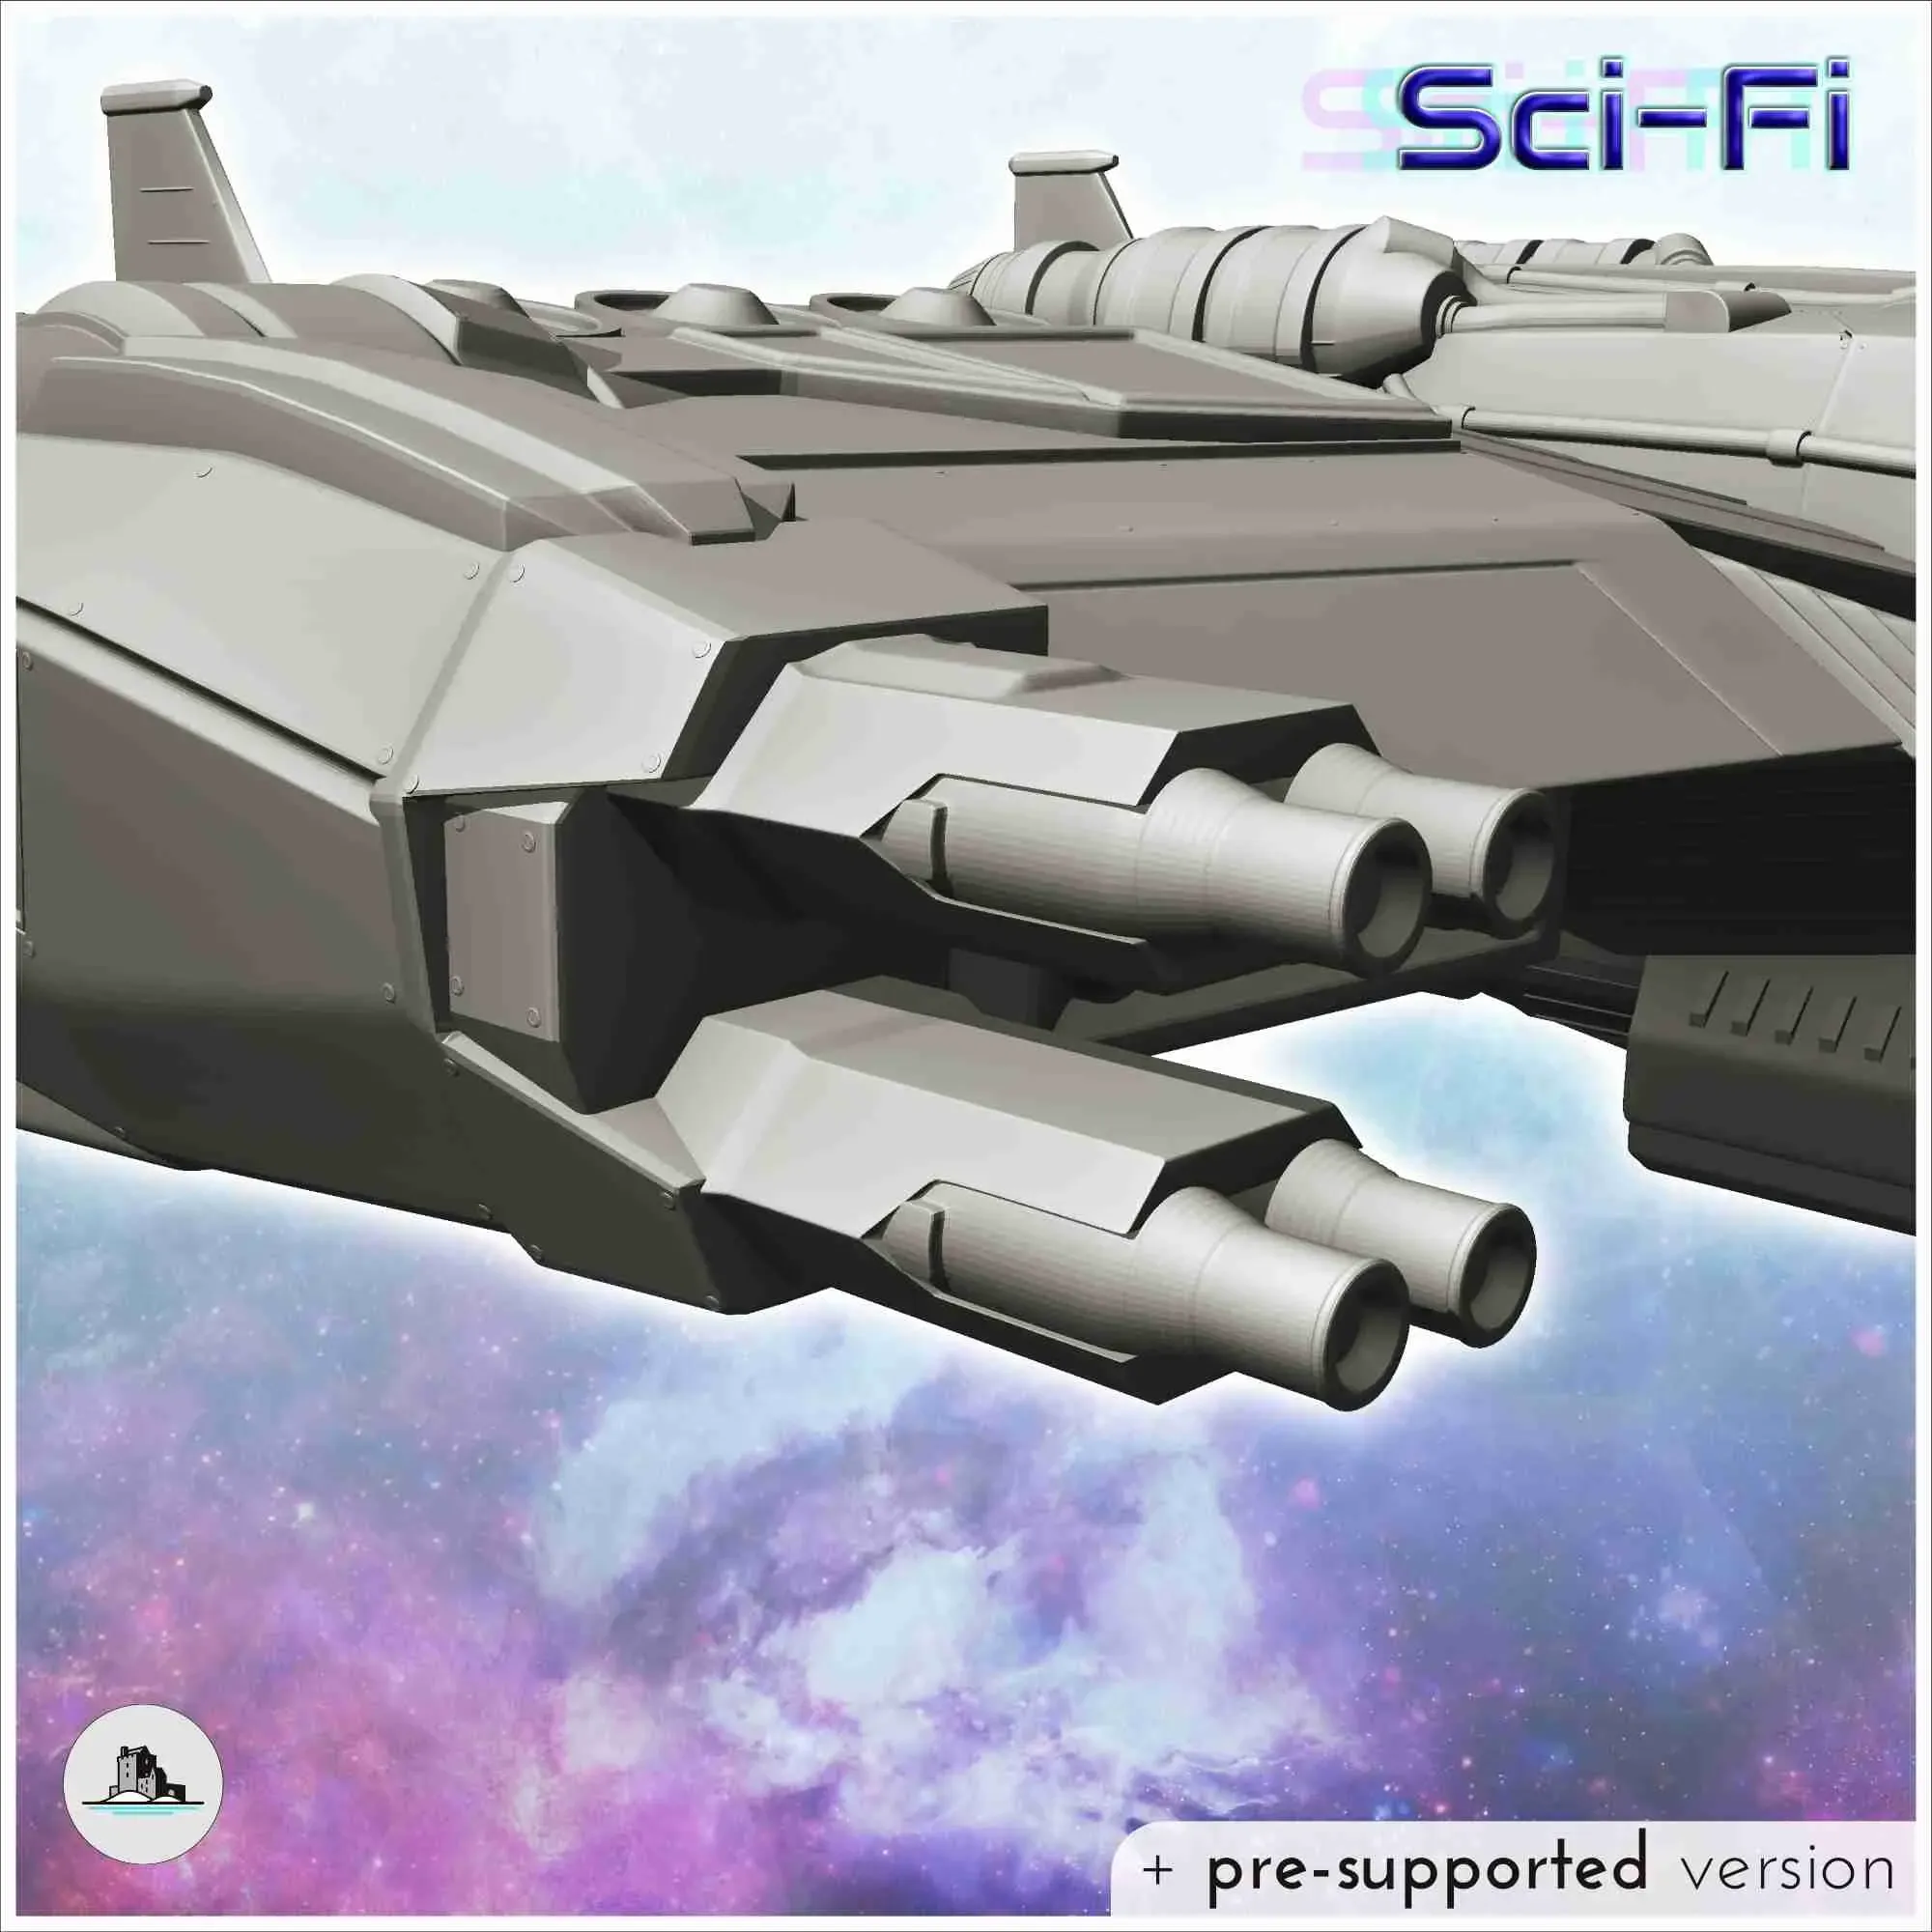 Palaemon spaceship 23 - sci-fi science fiction future 40k le